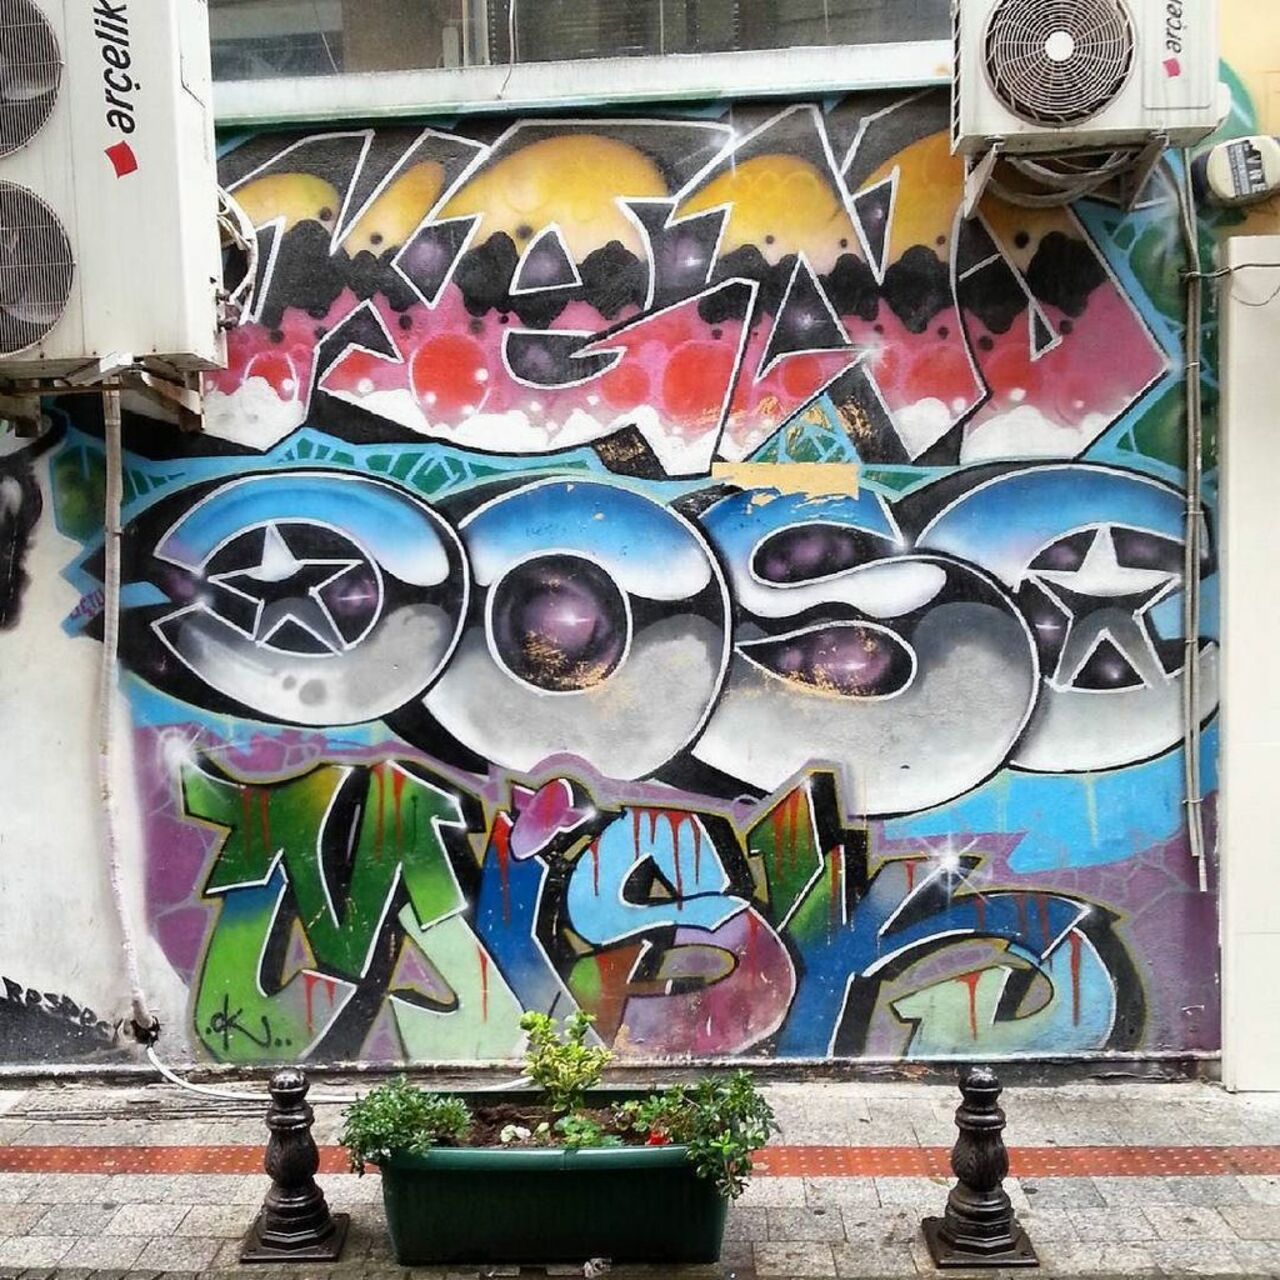 #streetartkadikoy #streetart #graffiti #publicart #urbanart #sokaksanatı #streetartistanbul #istanbulstreetart #gra… https://t.co/s4cY0wdkdv